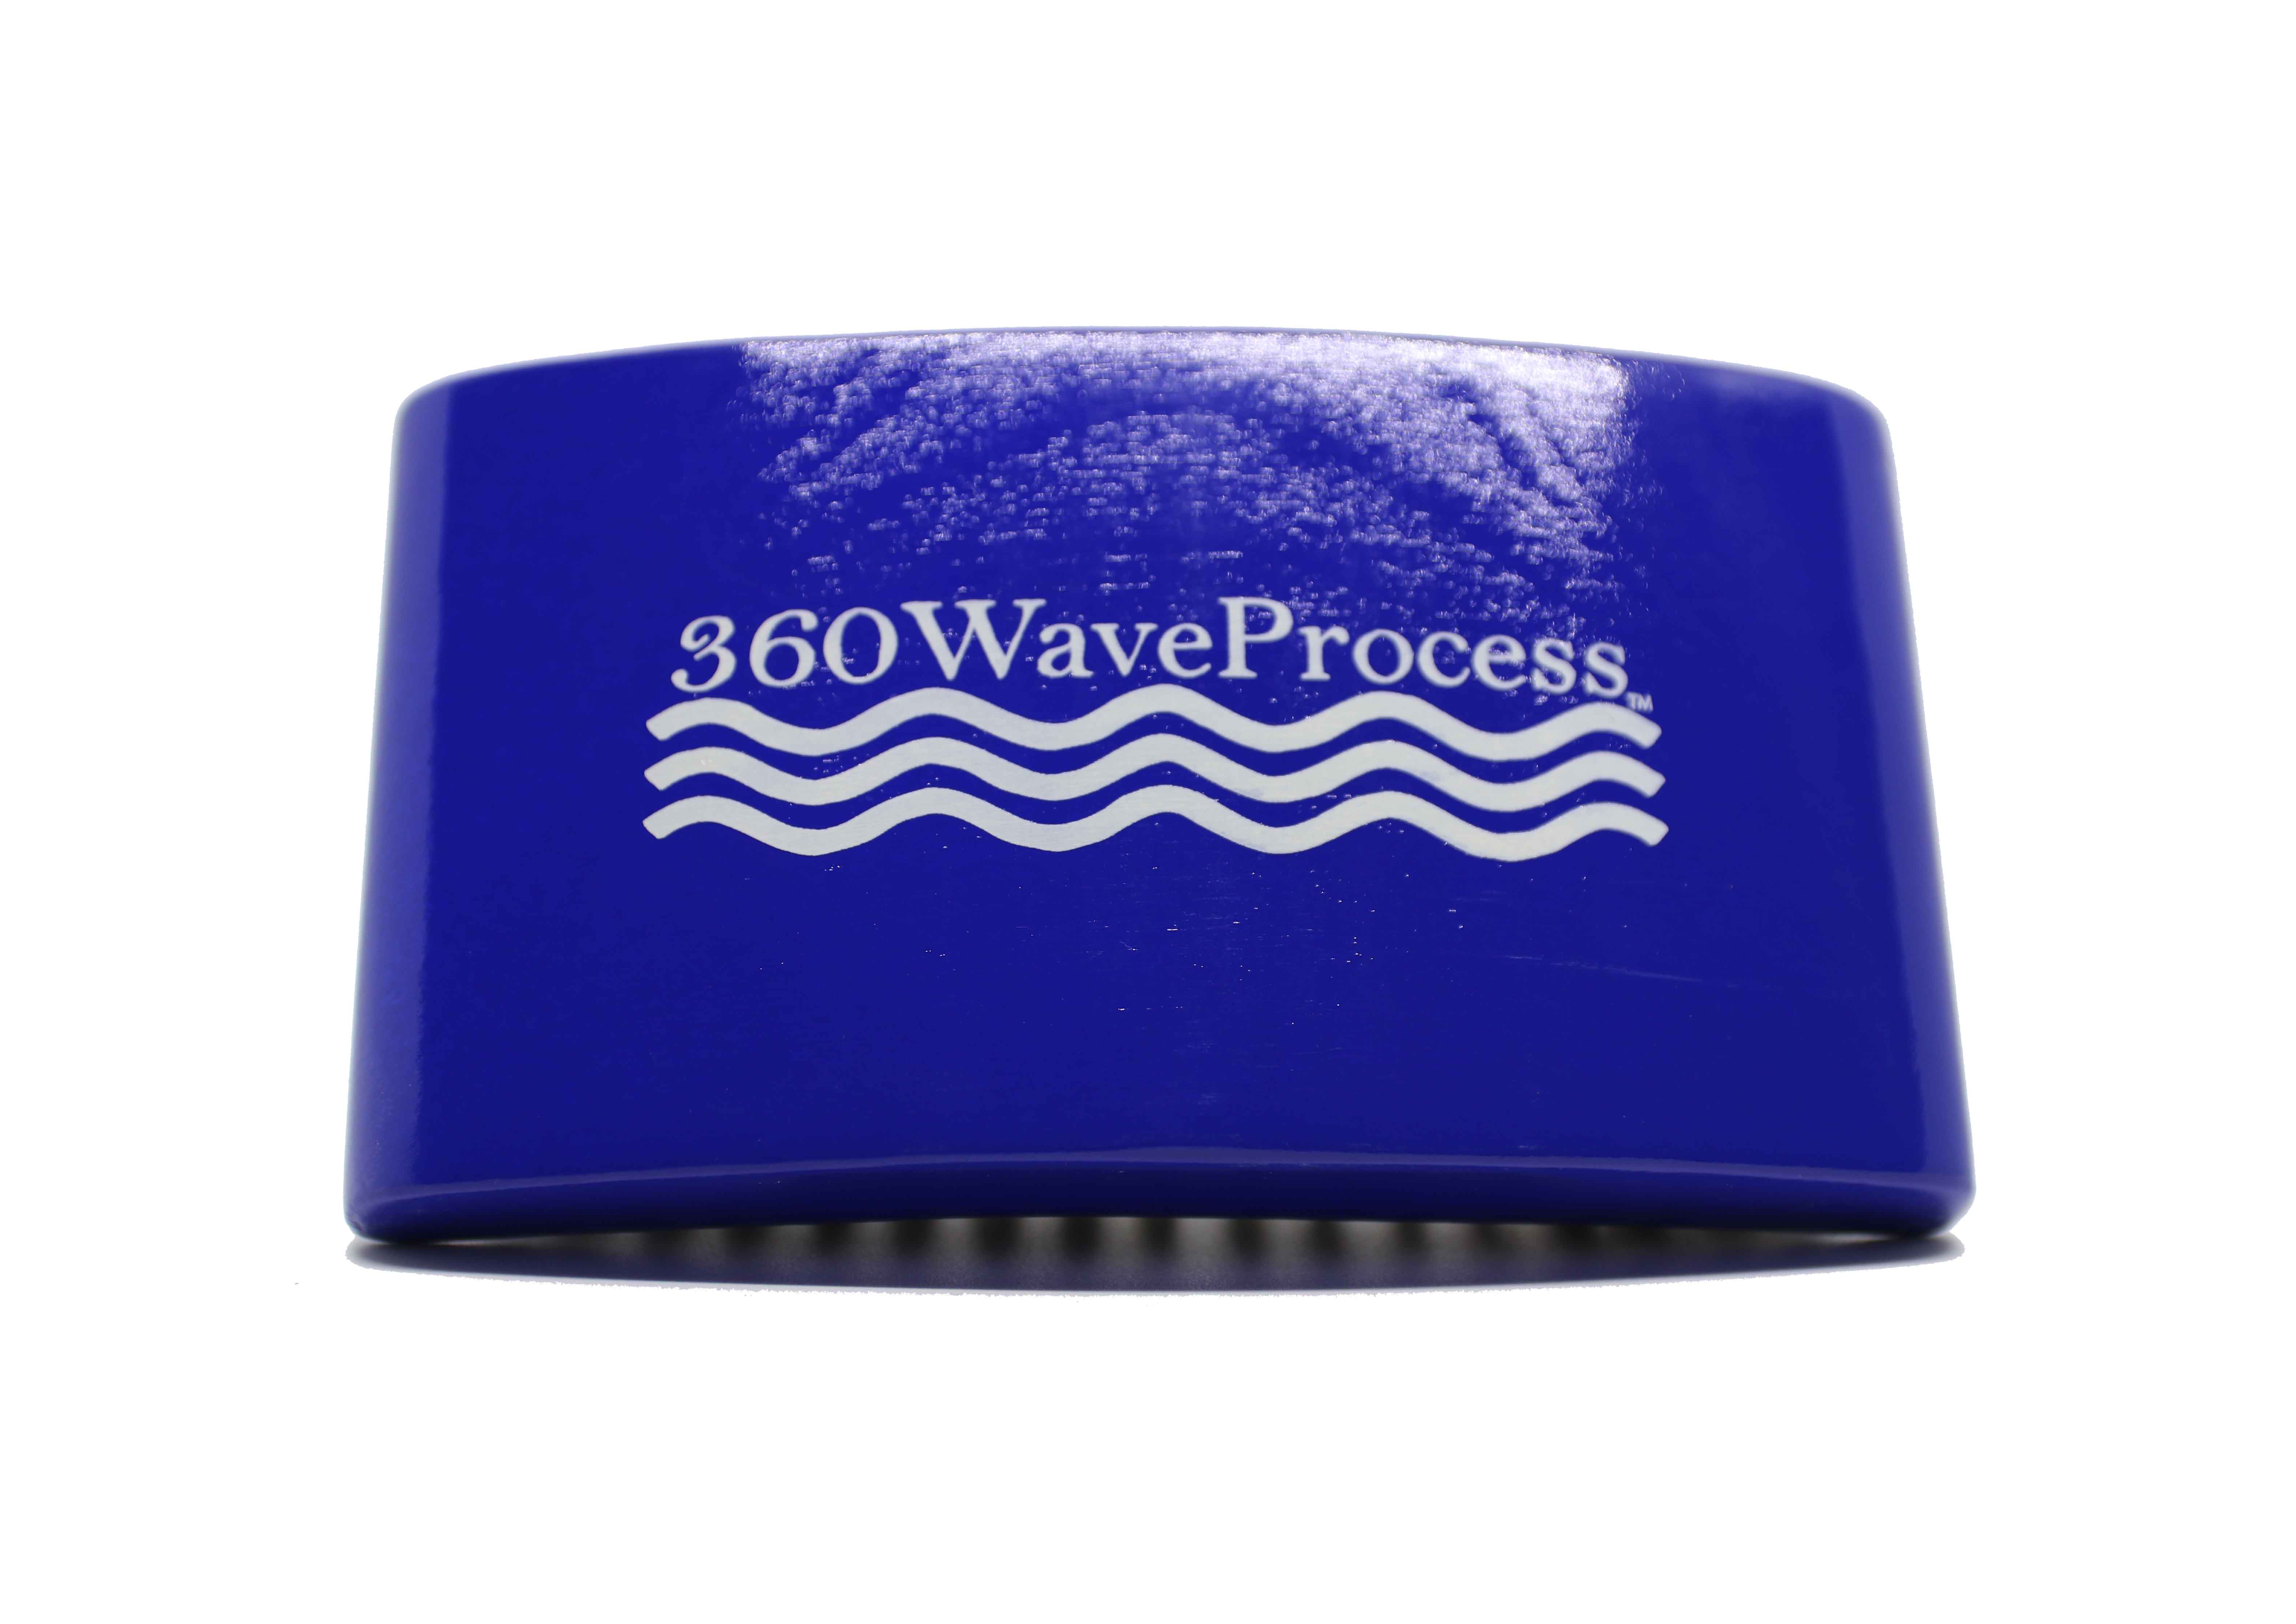 360 waves brush